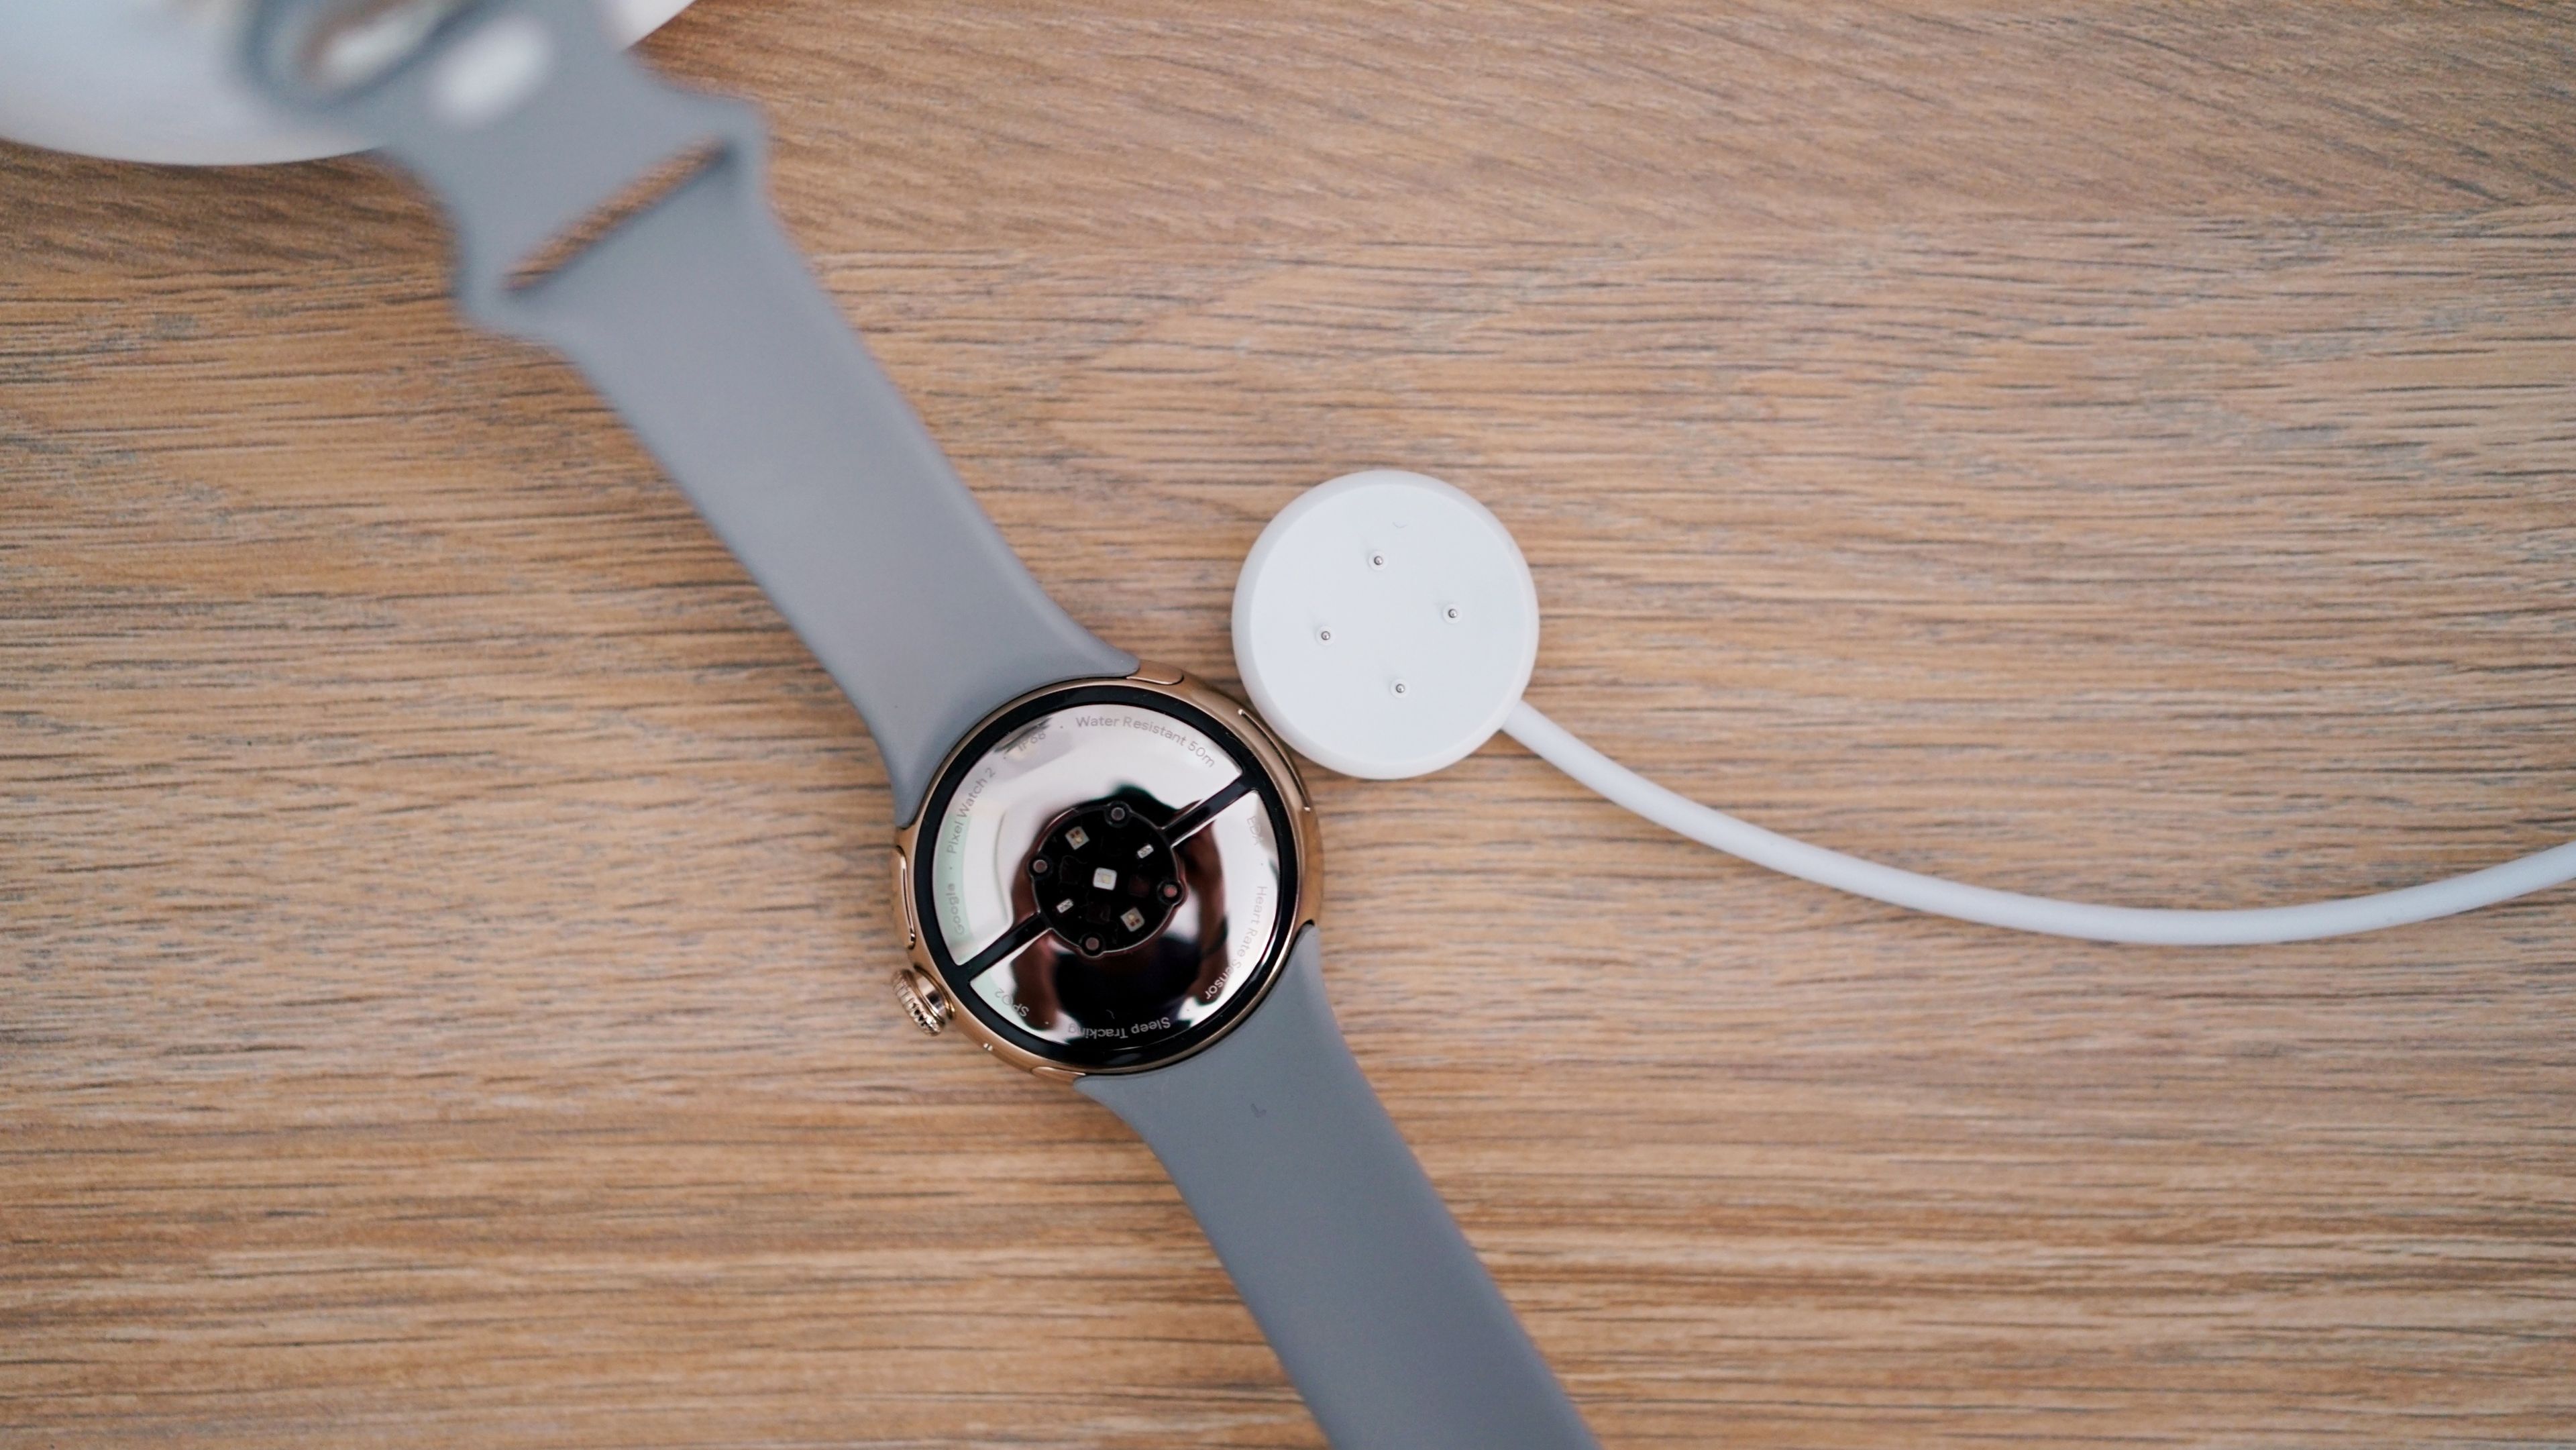 Sorprendentemente, Google sigue usando un cargador magnético con pines de contacto para cargar este Pixel Watch 2.